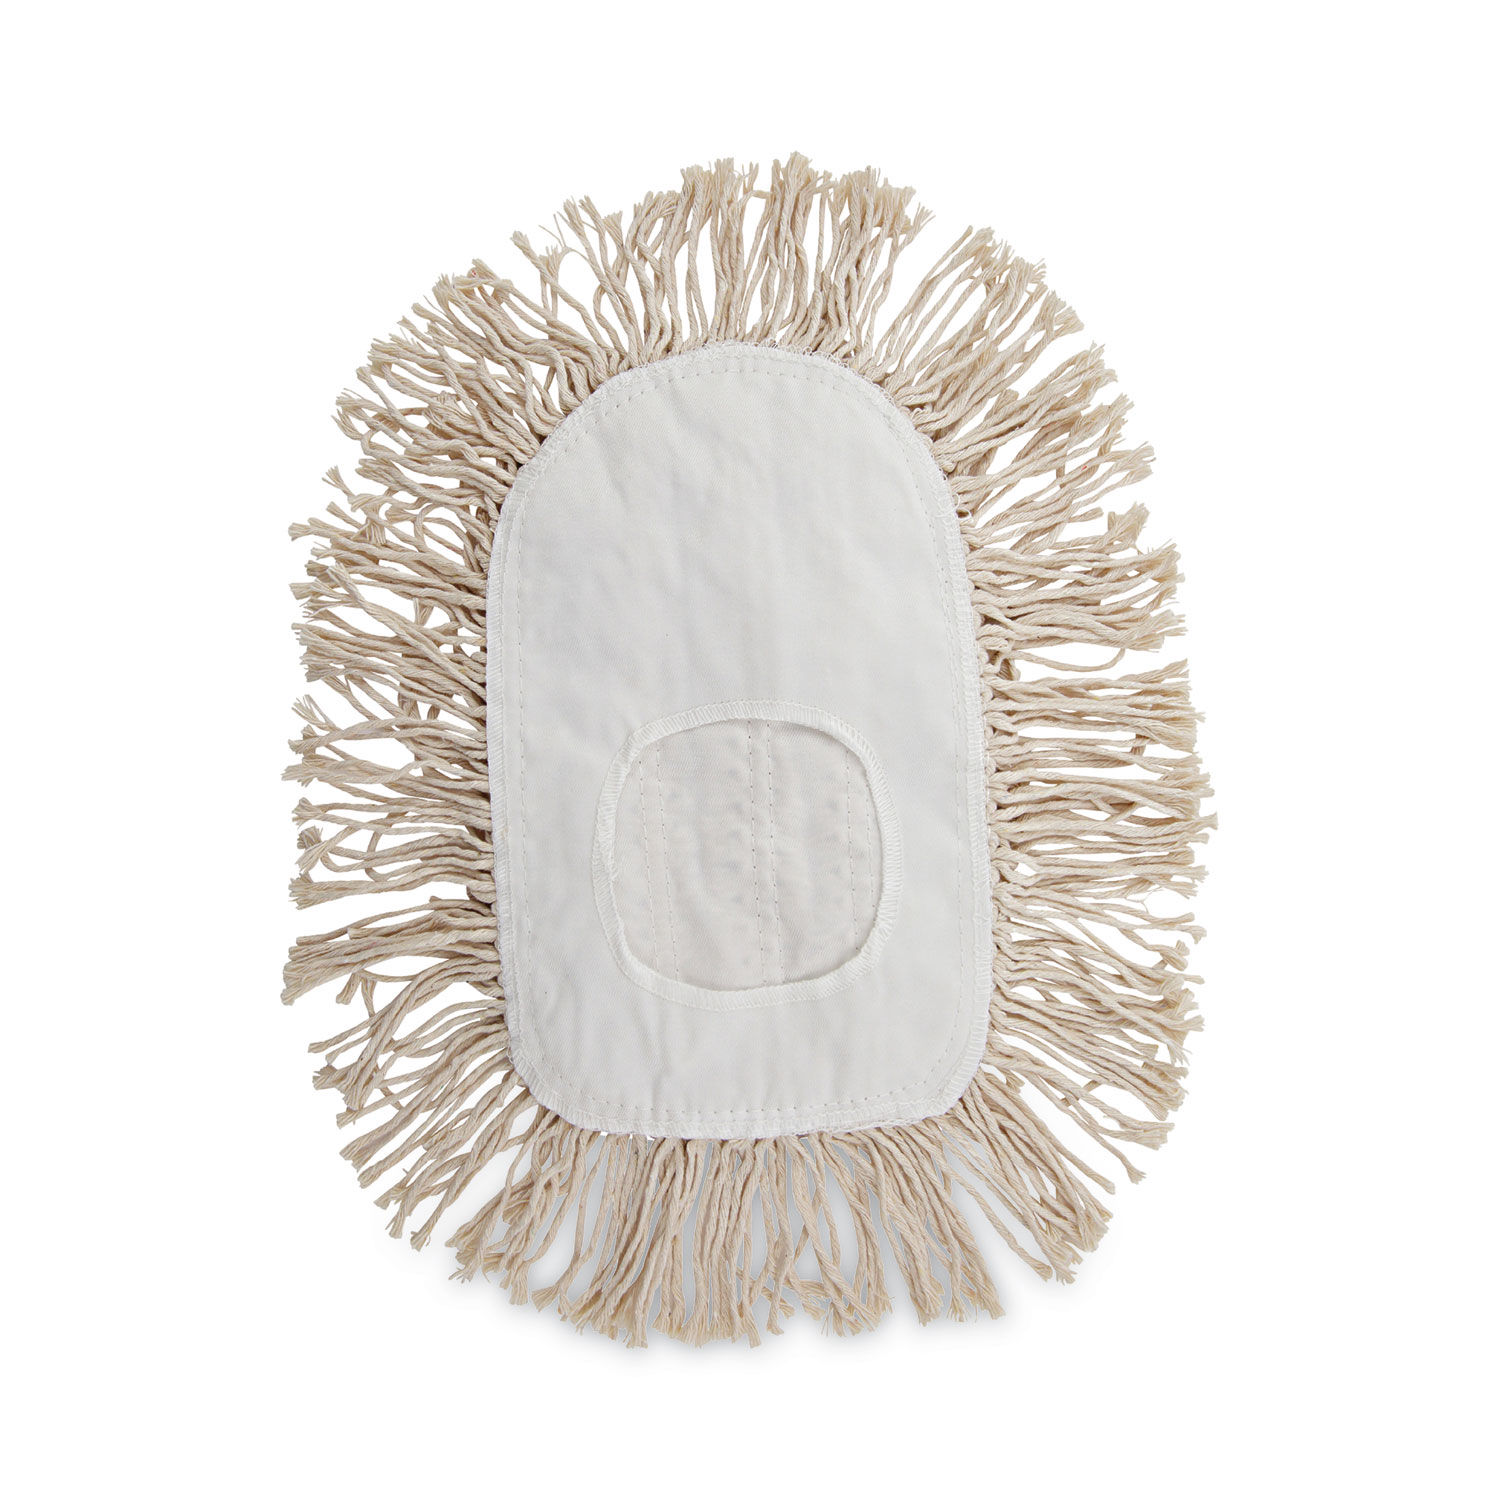 Wedge Dust Mop Head Cotton, 17.5 x 13.5, White